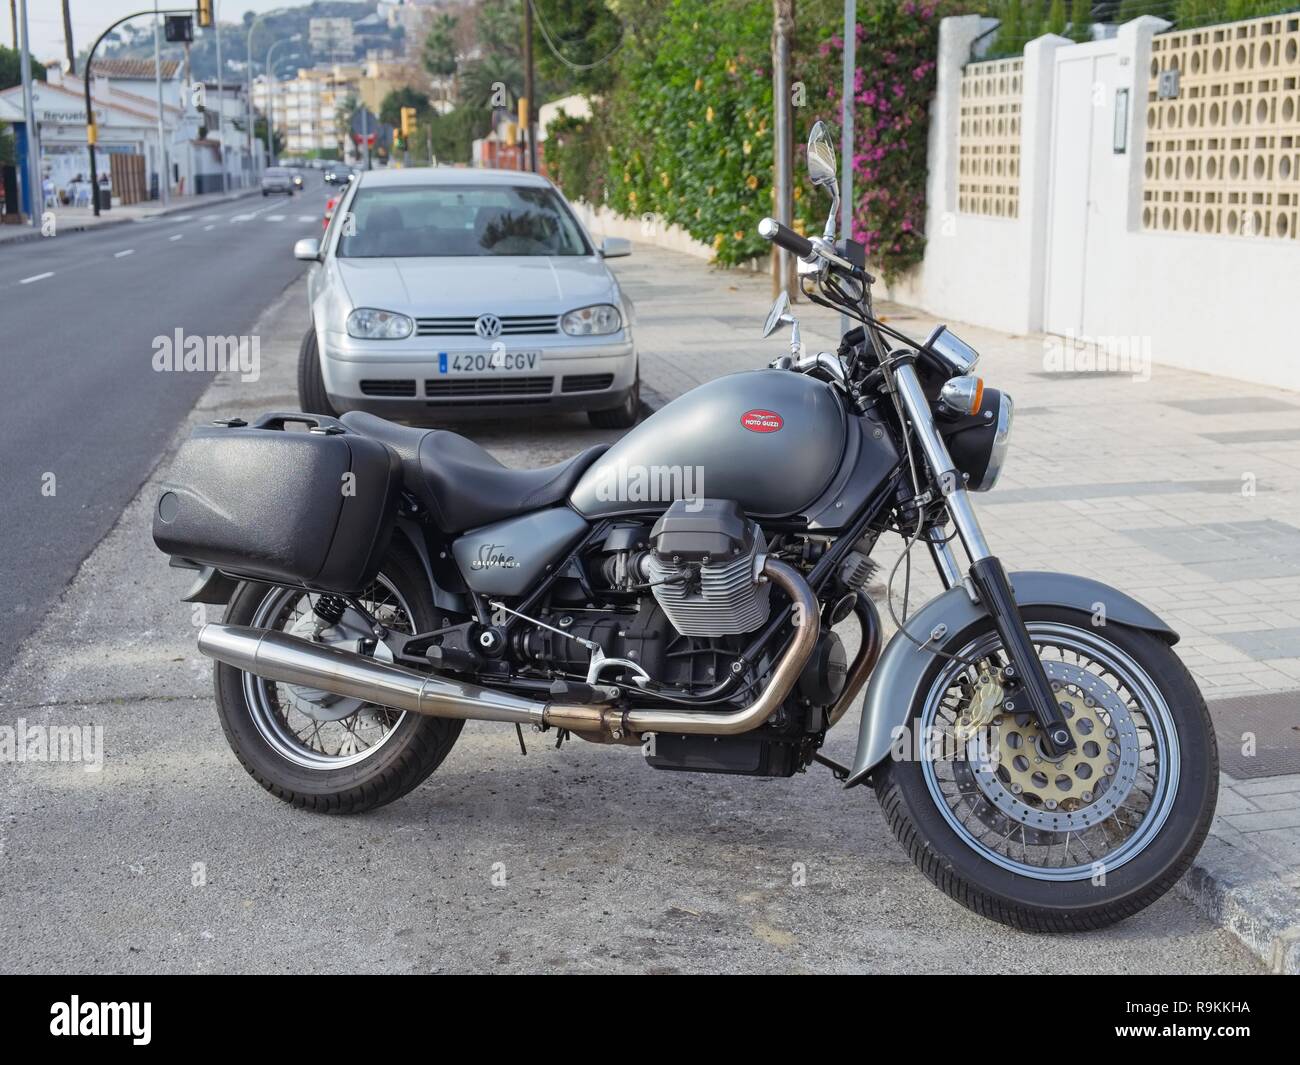 Moto guzzi california hi-res stock photography and images - Alamy